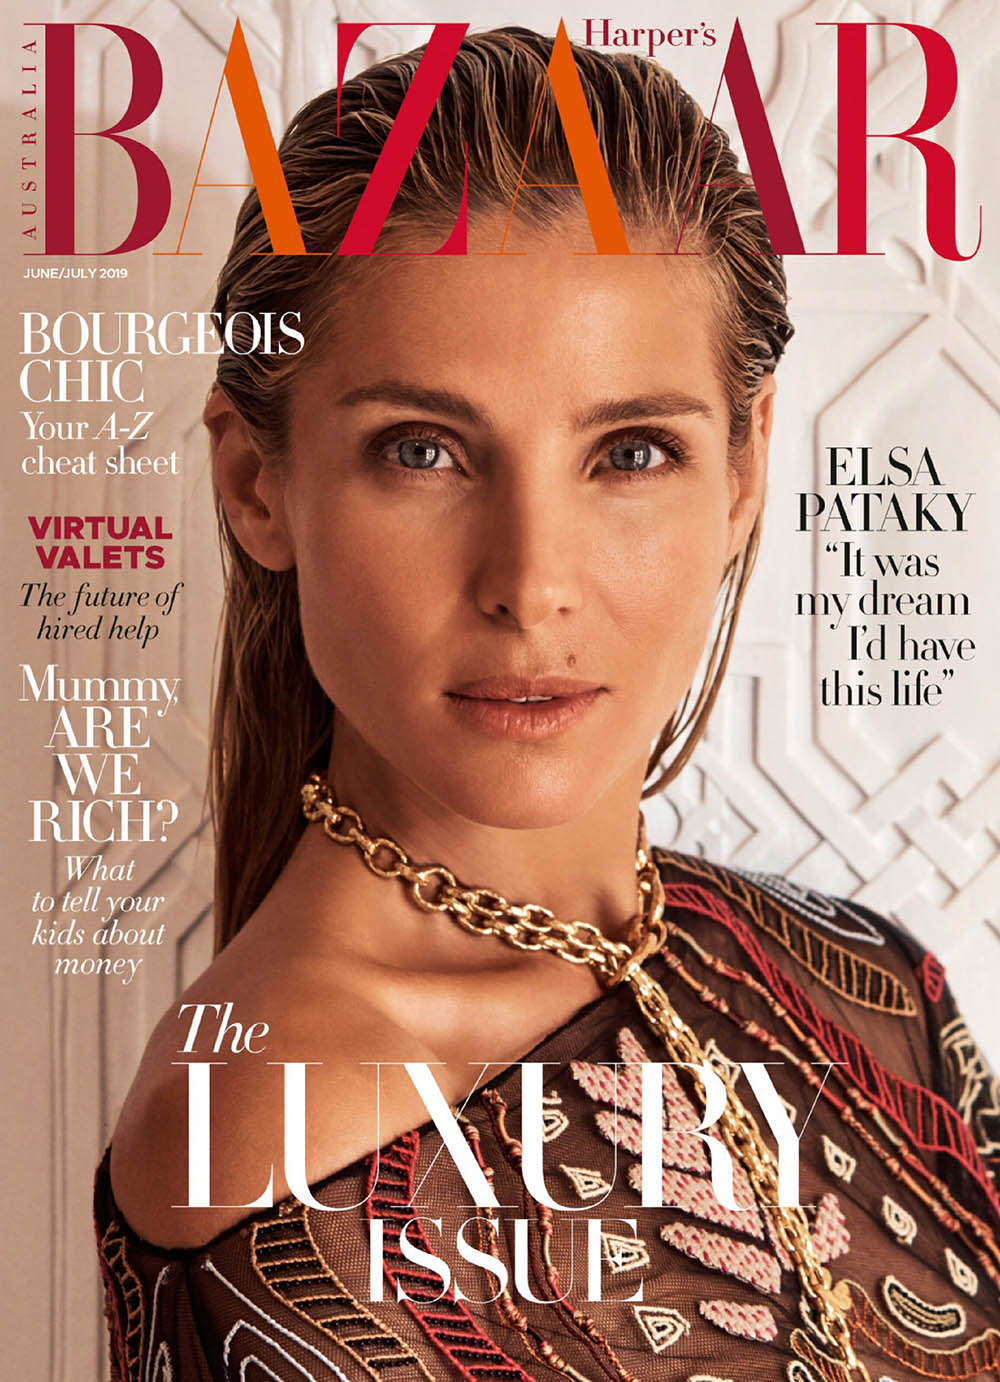 Elsa Pataky covers Harper’s Bazaar Australia June July 2019 by Pierre Toussaint